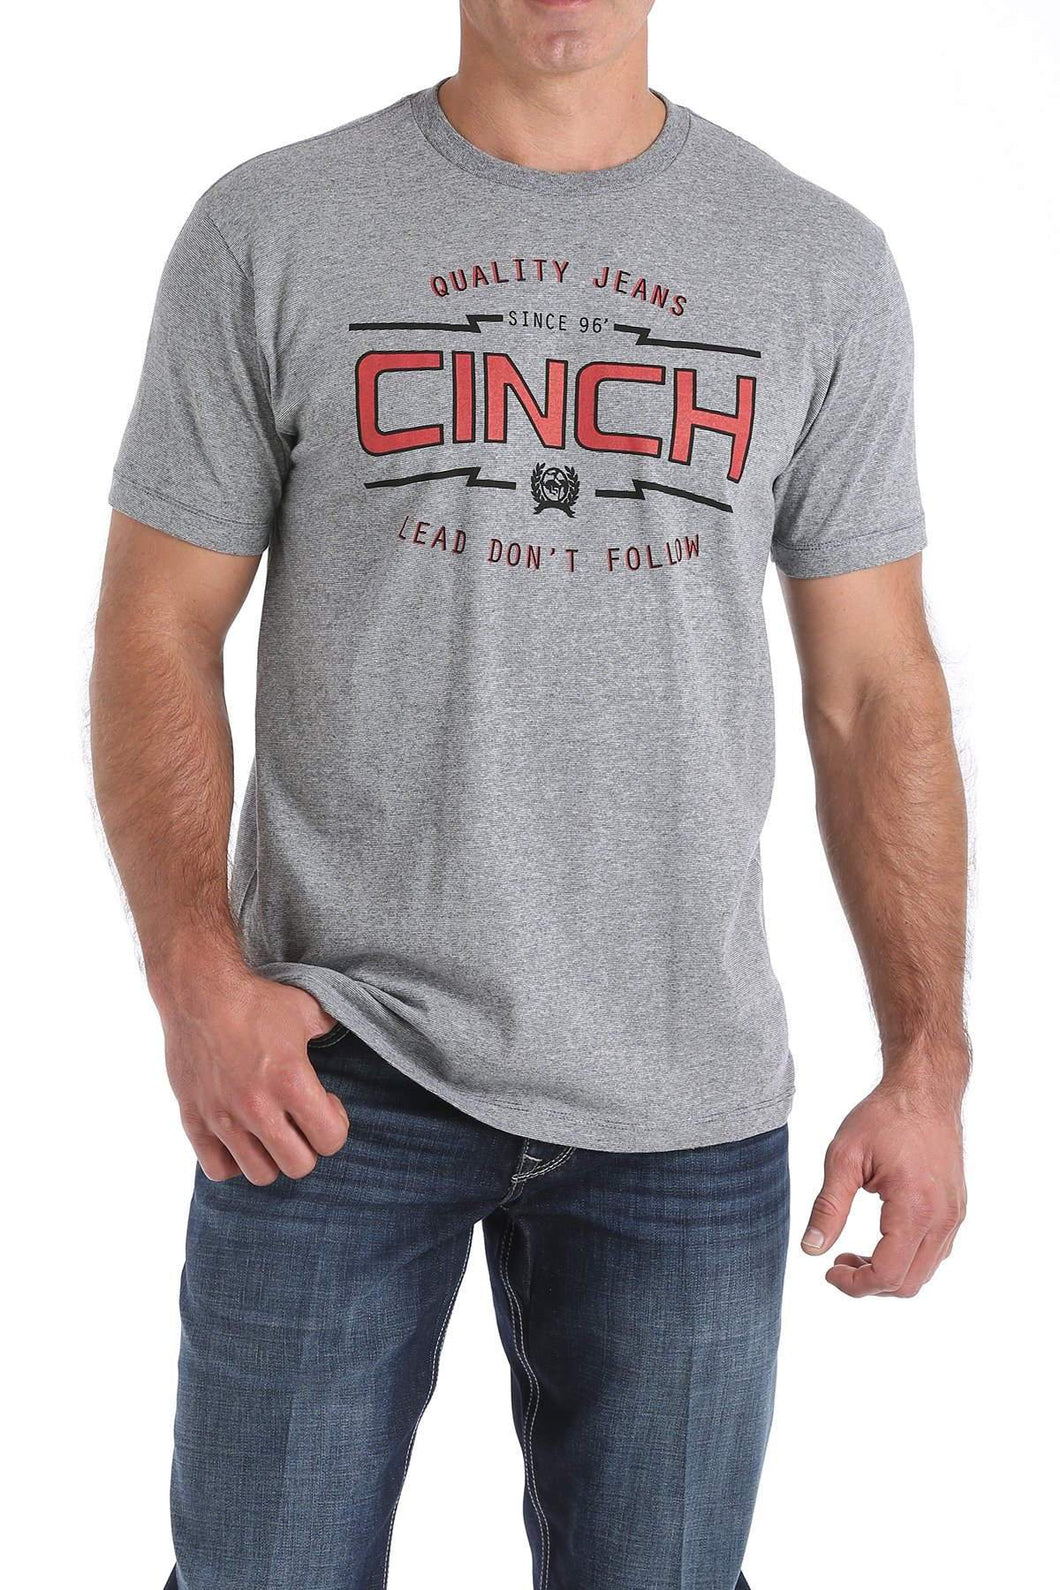 Cinch | T-Shirt | Gray & Red